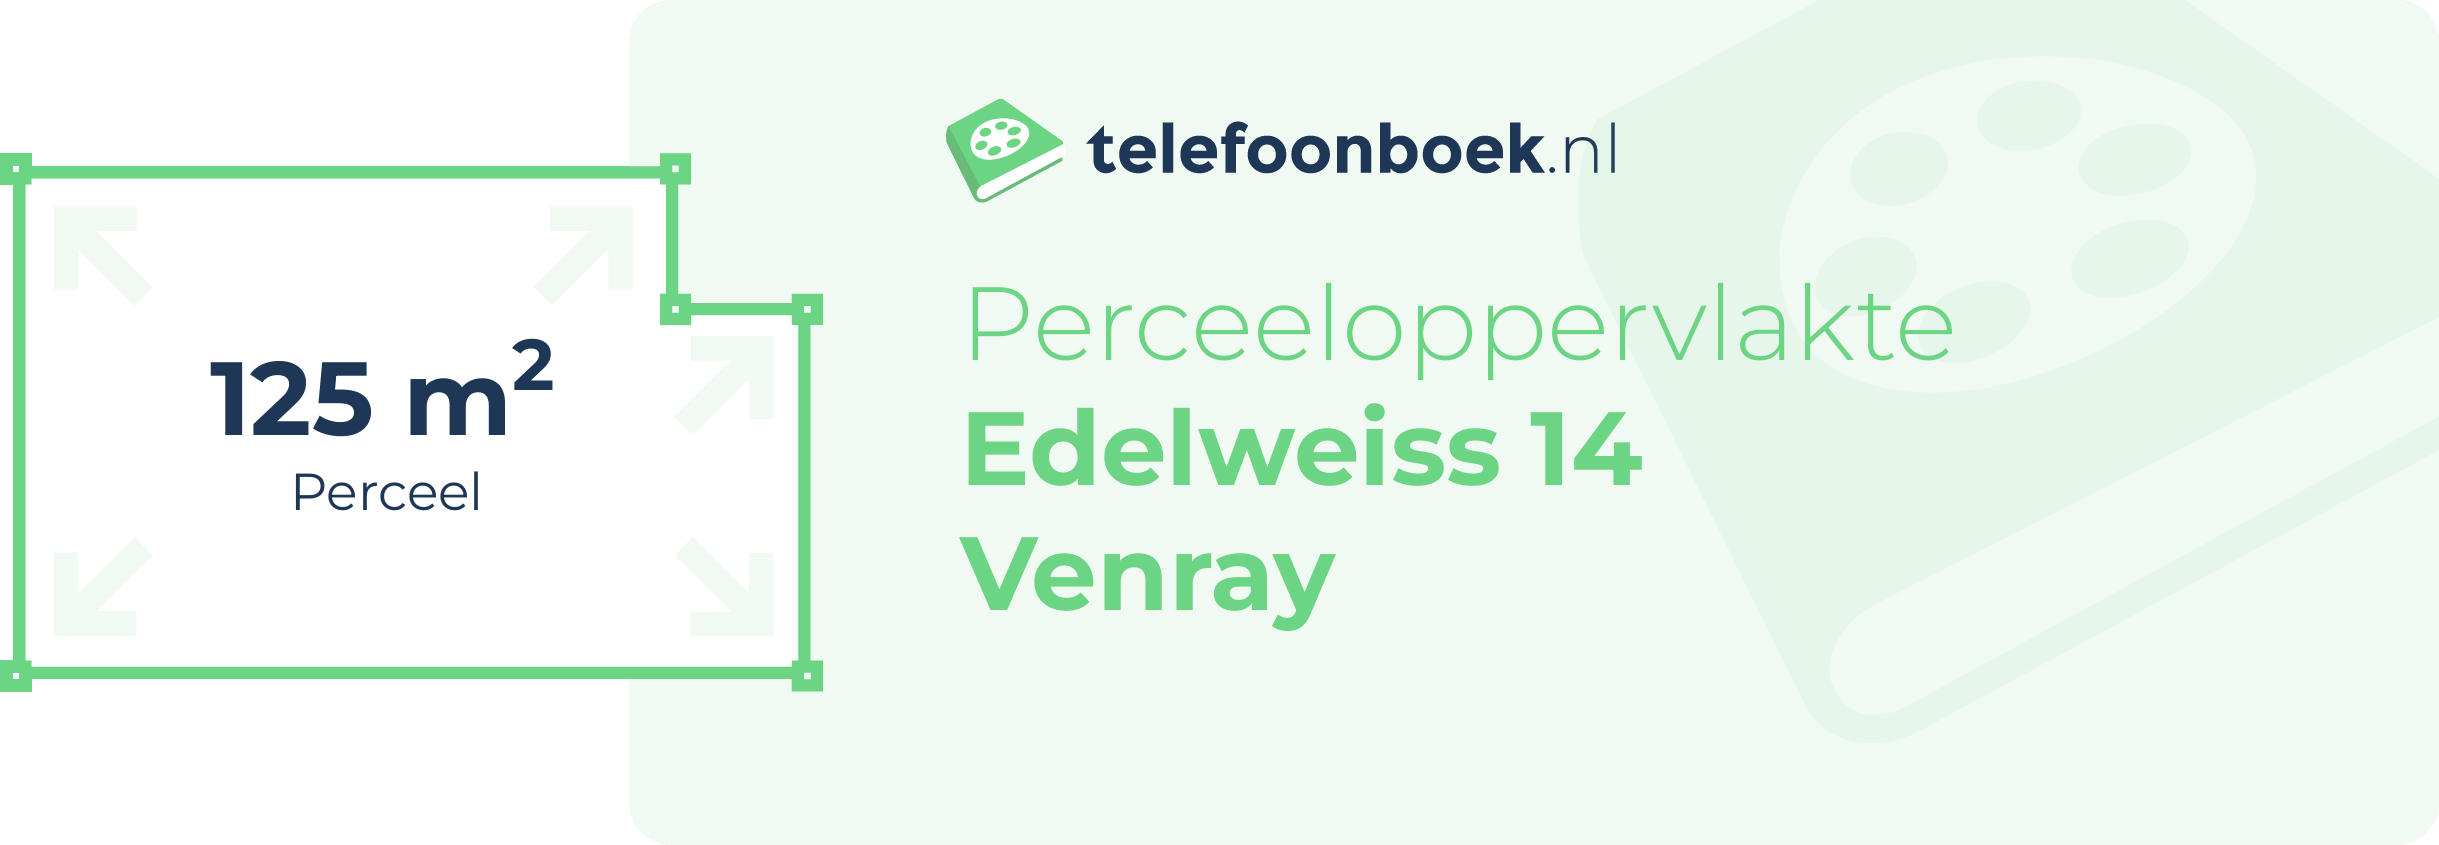 Perceeloppervlakte Edelweiss 14 Venray